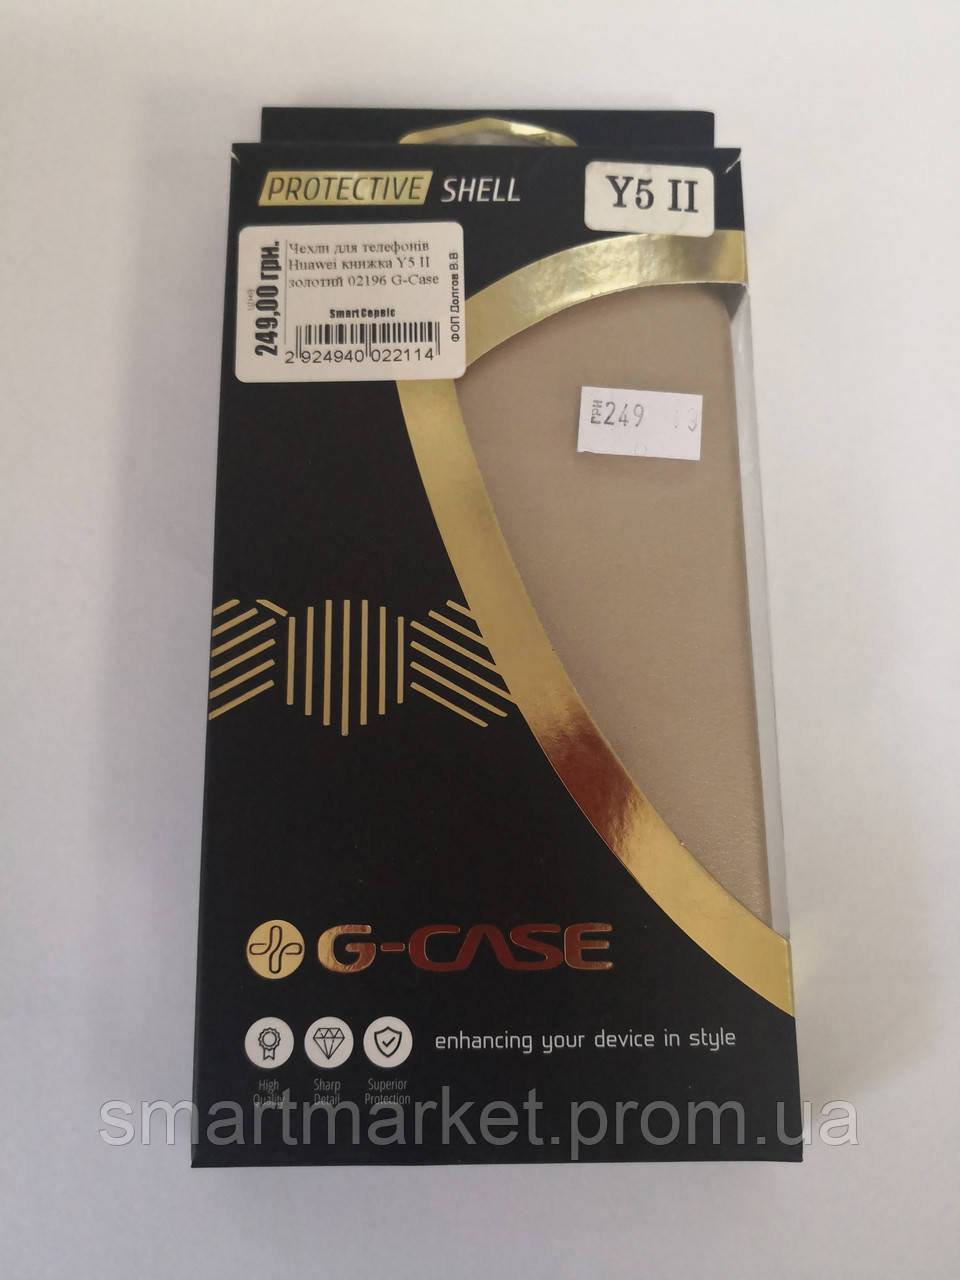 Чехли для телефонів Huawei книжка Y5 II золотий 02196 G-Case